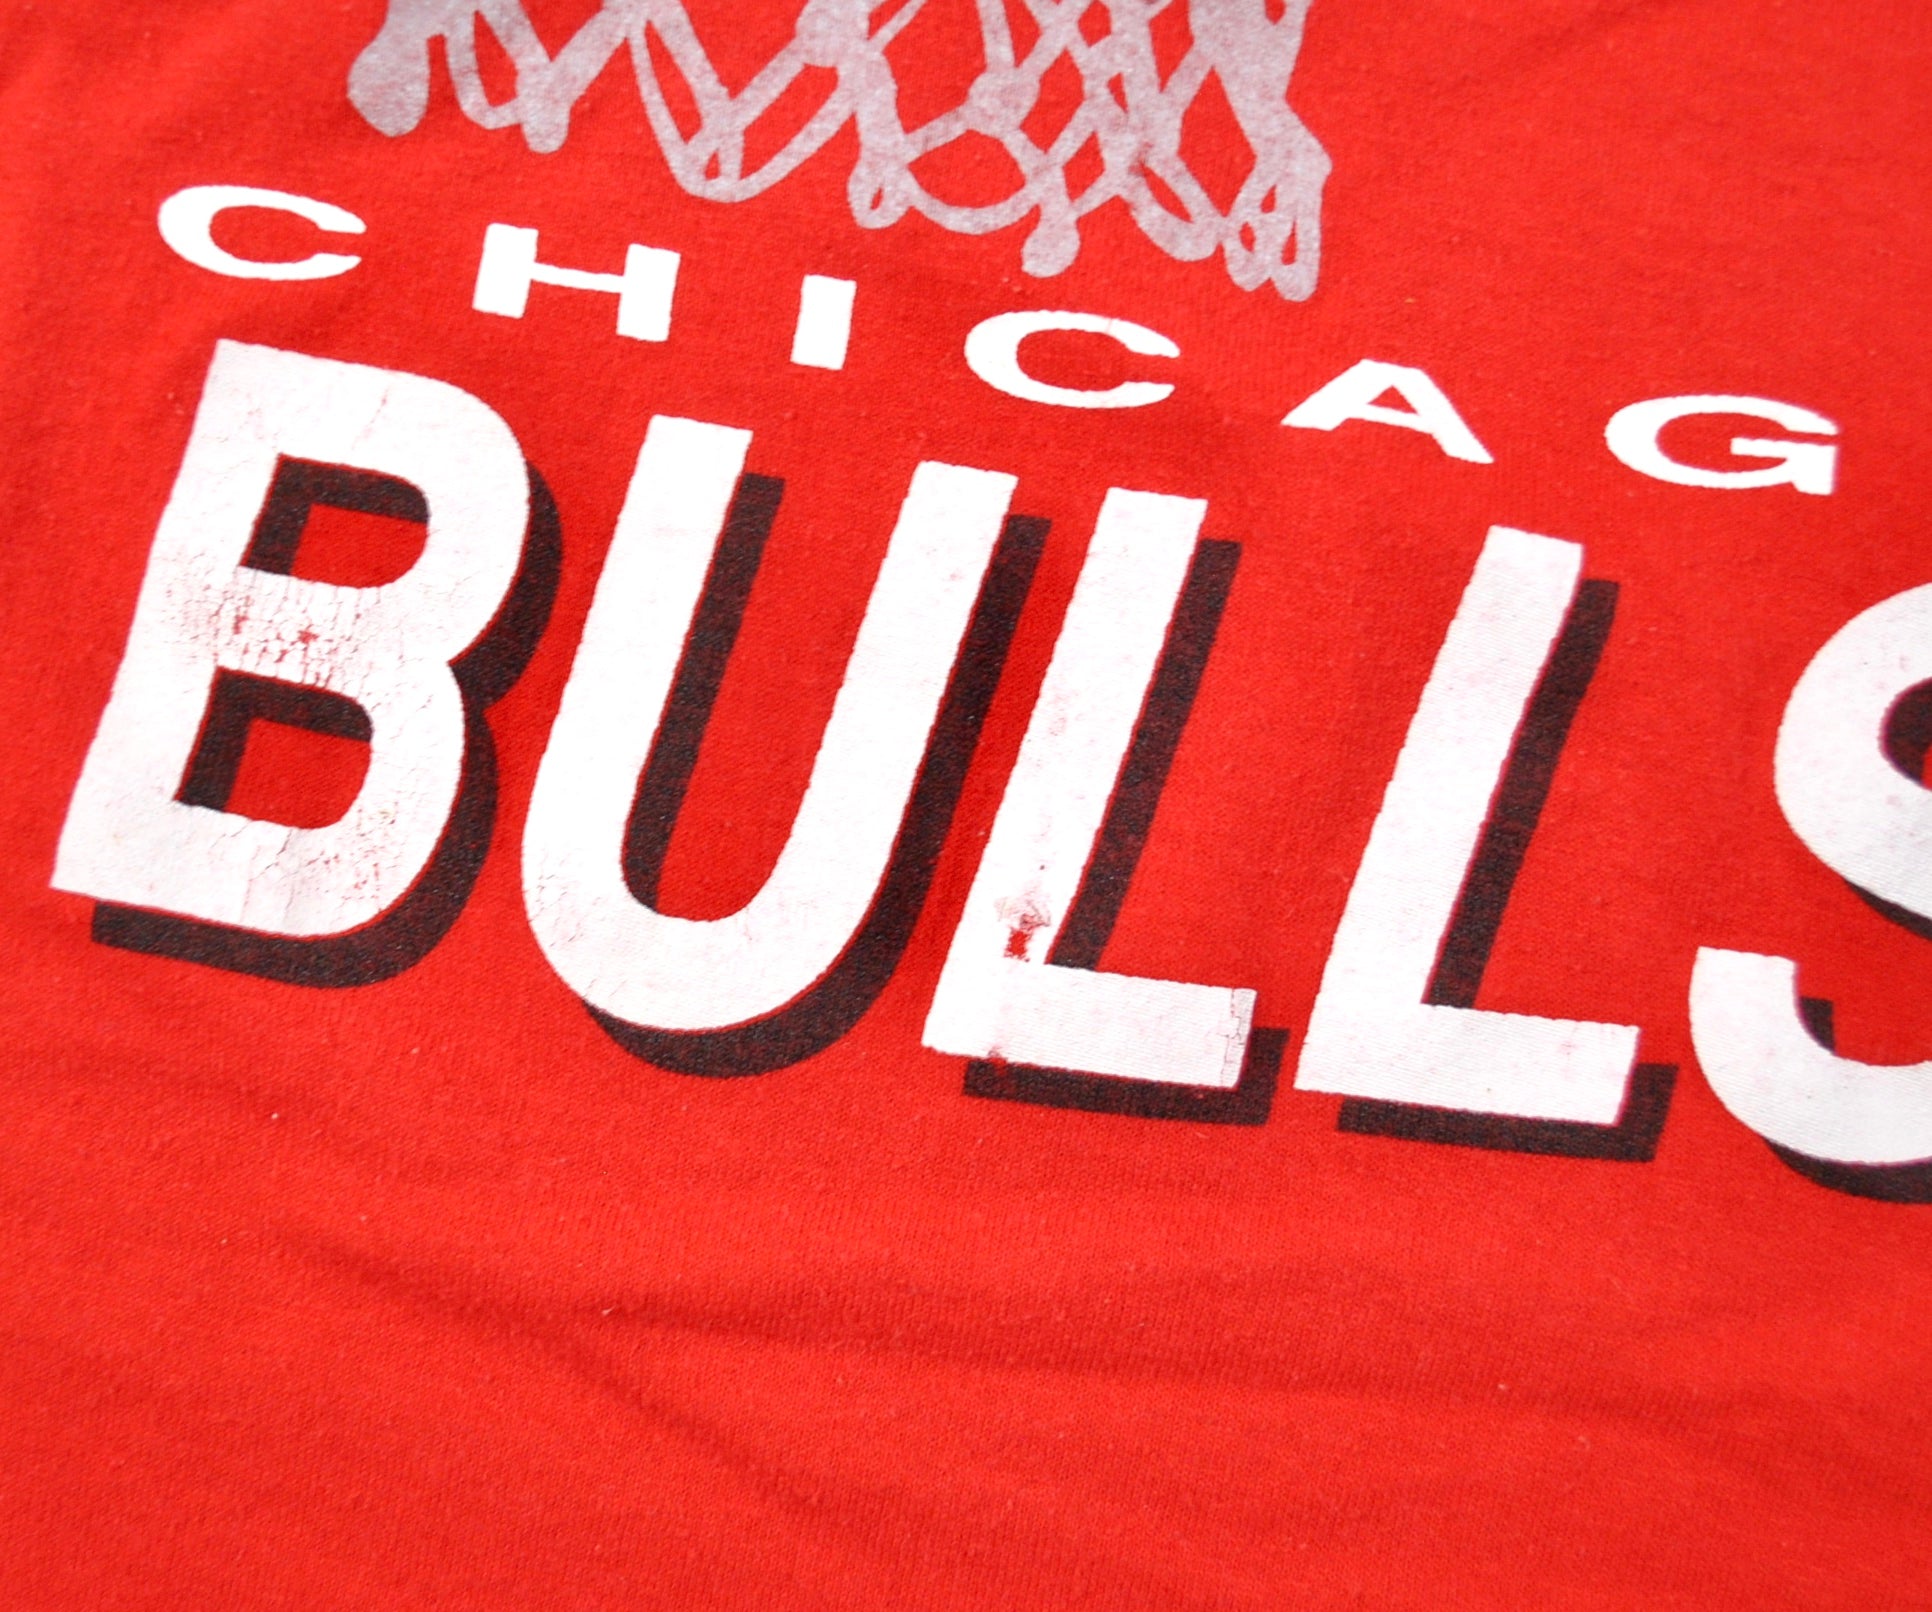 adidas Chicago Bulls NBA Sweatshirts for sale